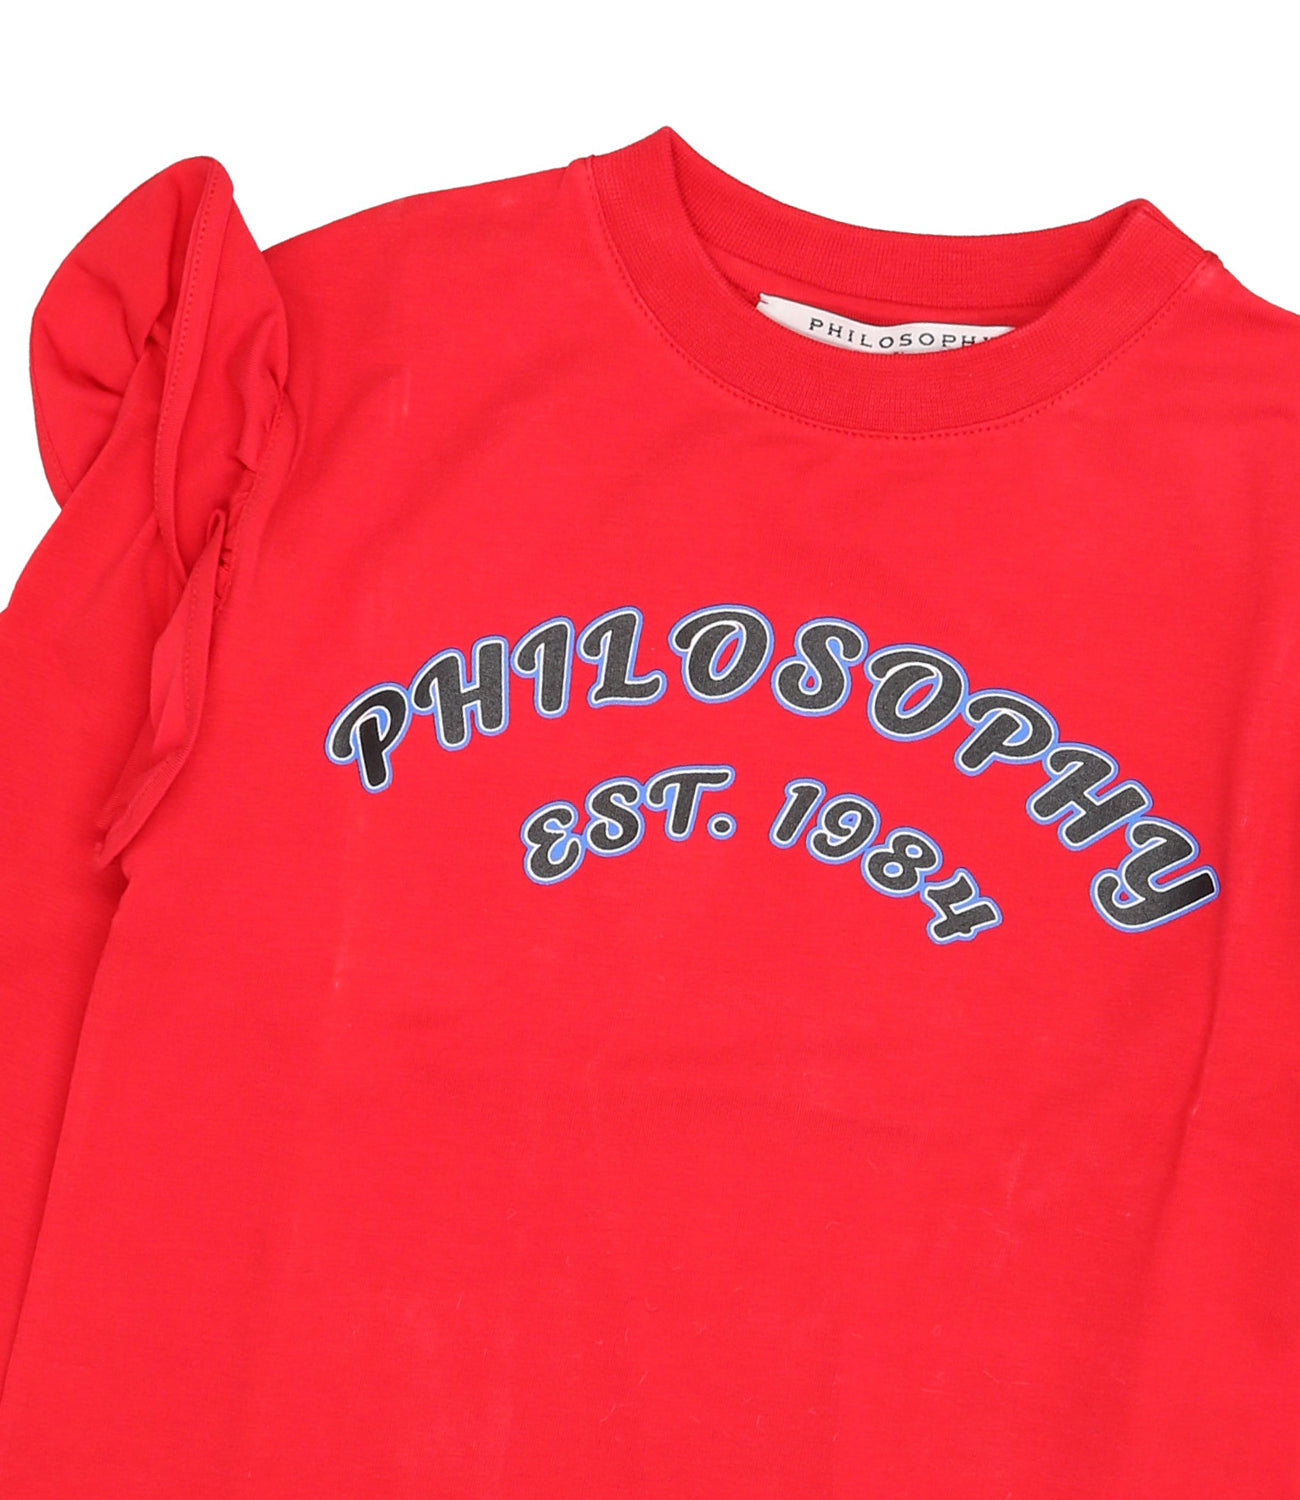 Philosophy di Lorenzo Serafini Kids | Red T-Shirt